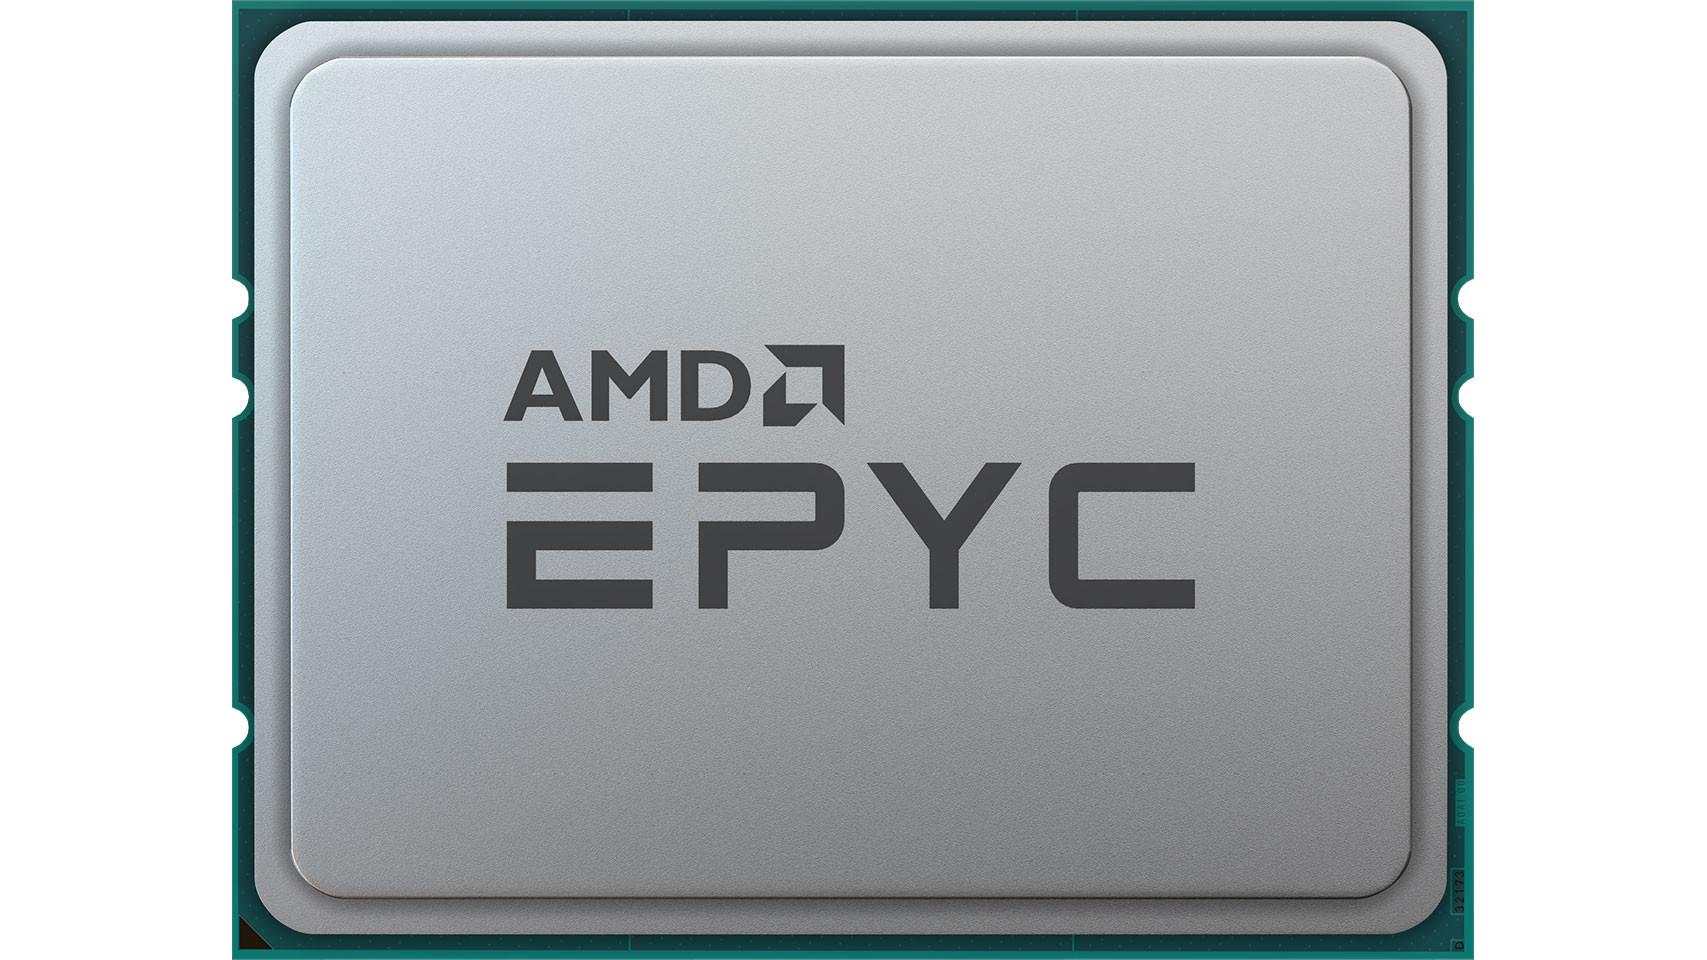 More information about "Παρουσιάστηκε η 2η γενιά AMD EPYC για τα σύγχρονα datacenters"